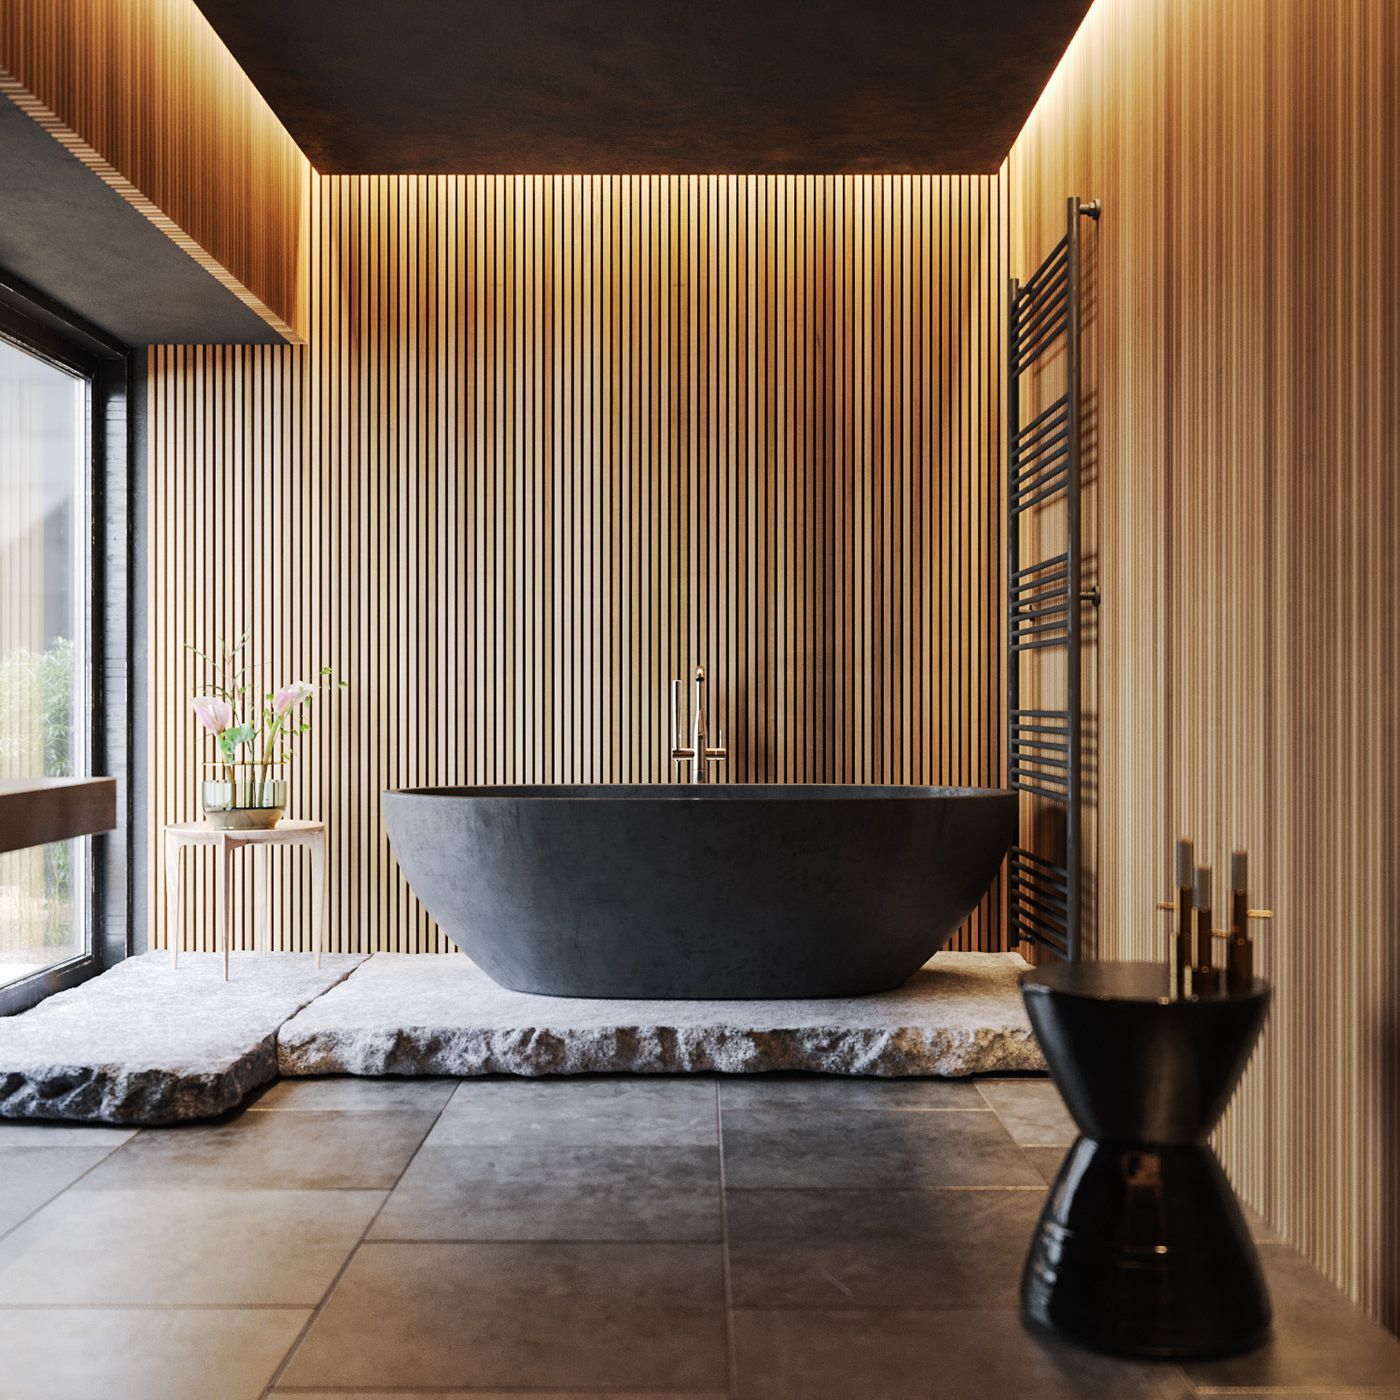 Rustic Small Bathroom Wood Decor : Transform Your Bathroom with Charming Rustic Small Wood Decor